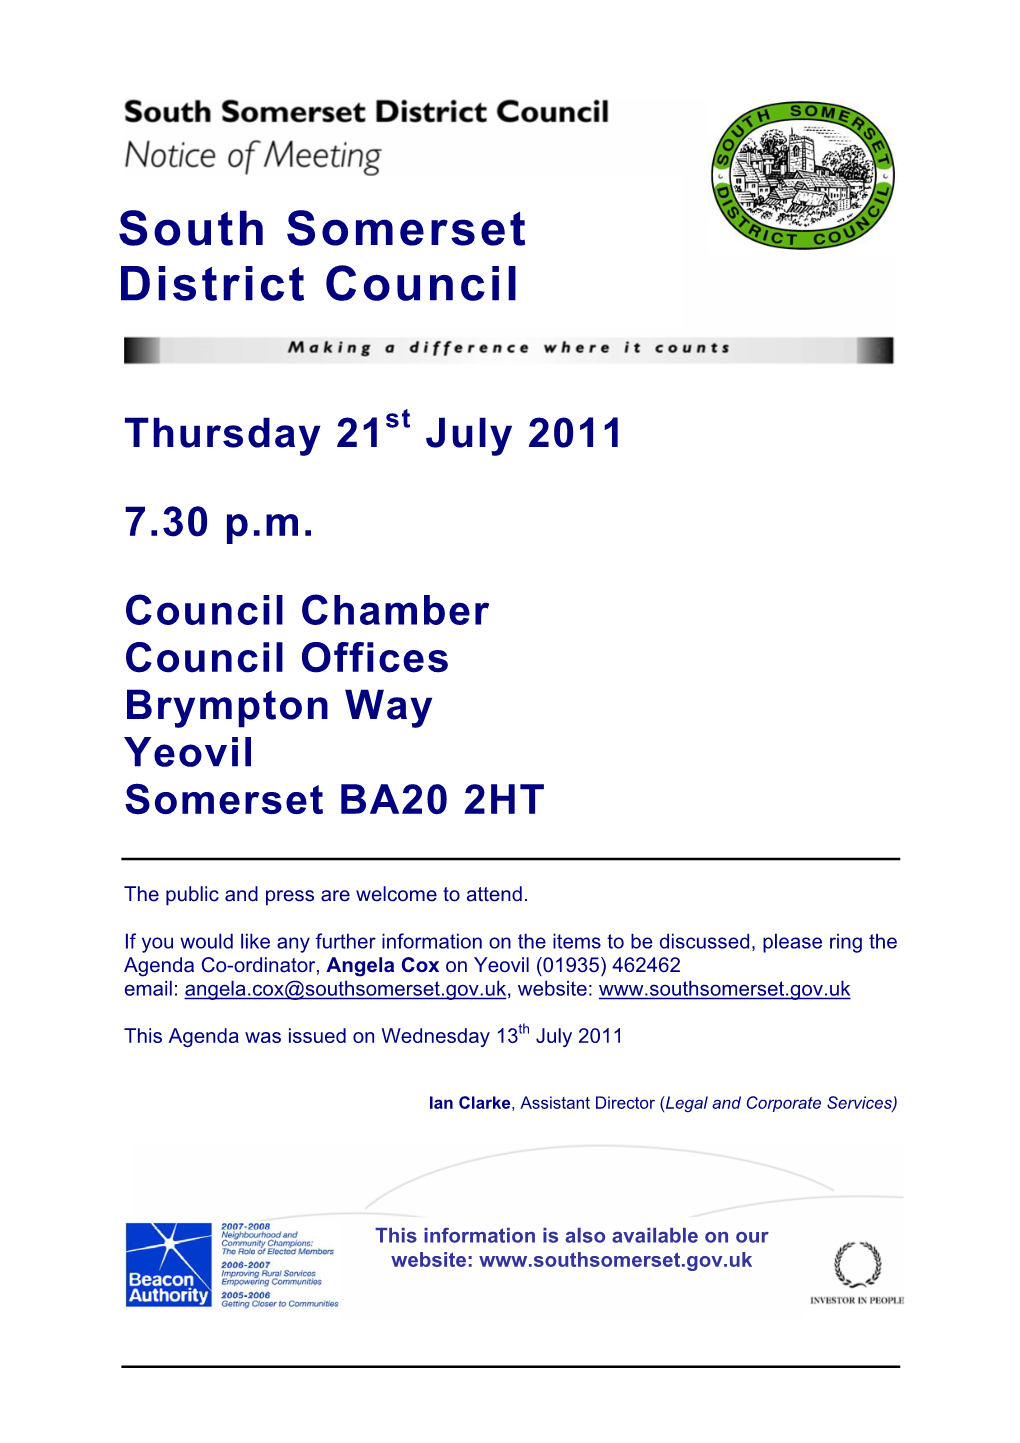 South Somerset District Council Thursday 21